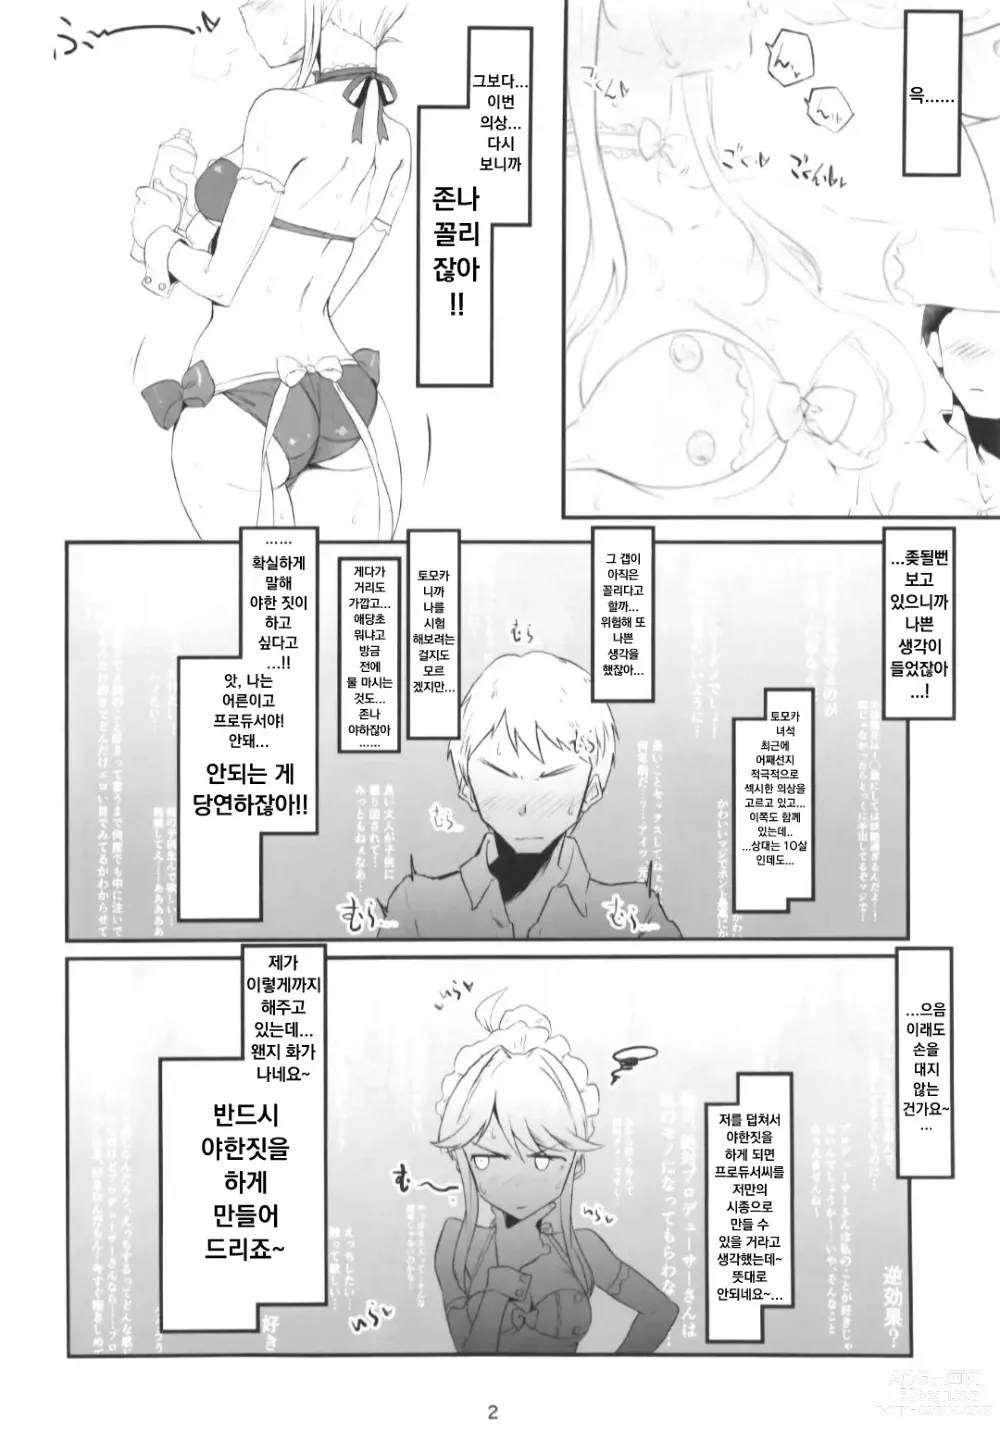 Page 3 of doujinshi 성모는 사실 느끼기 쉽다